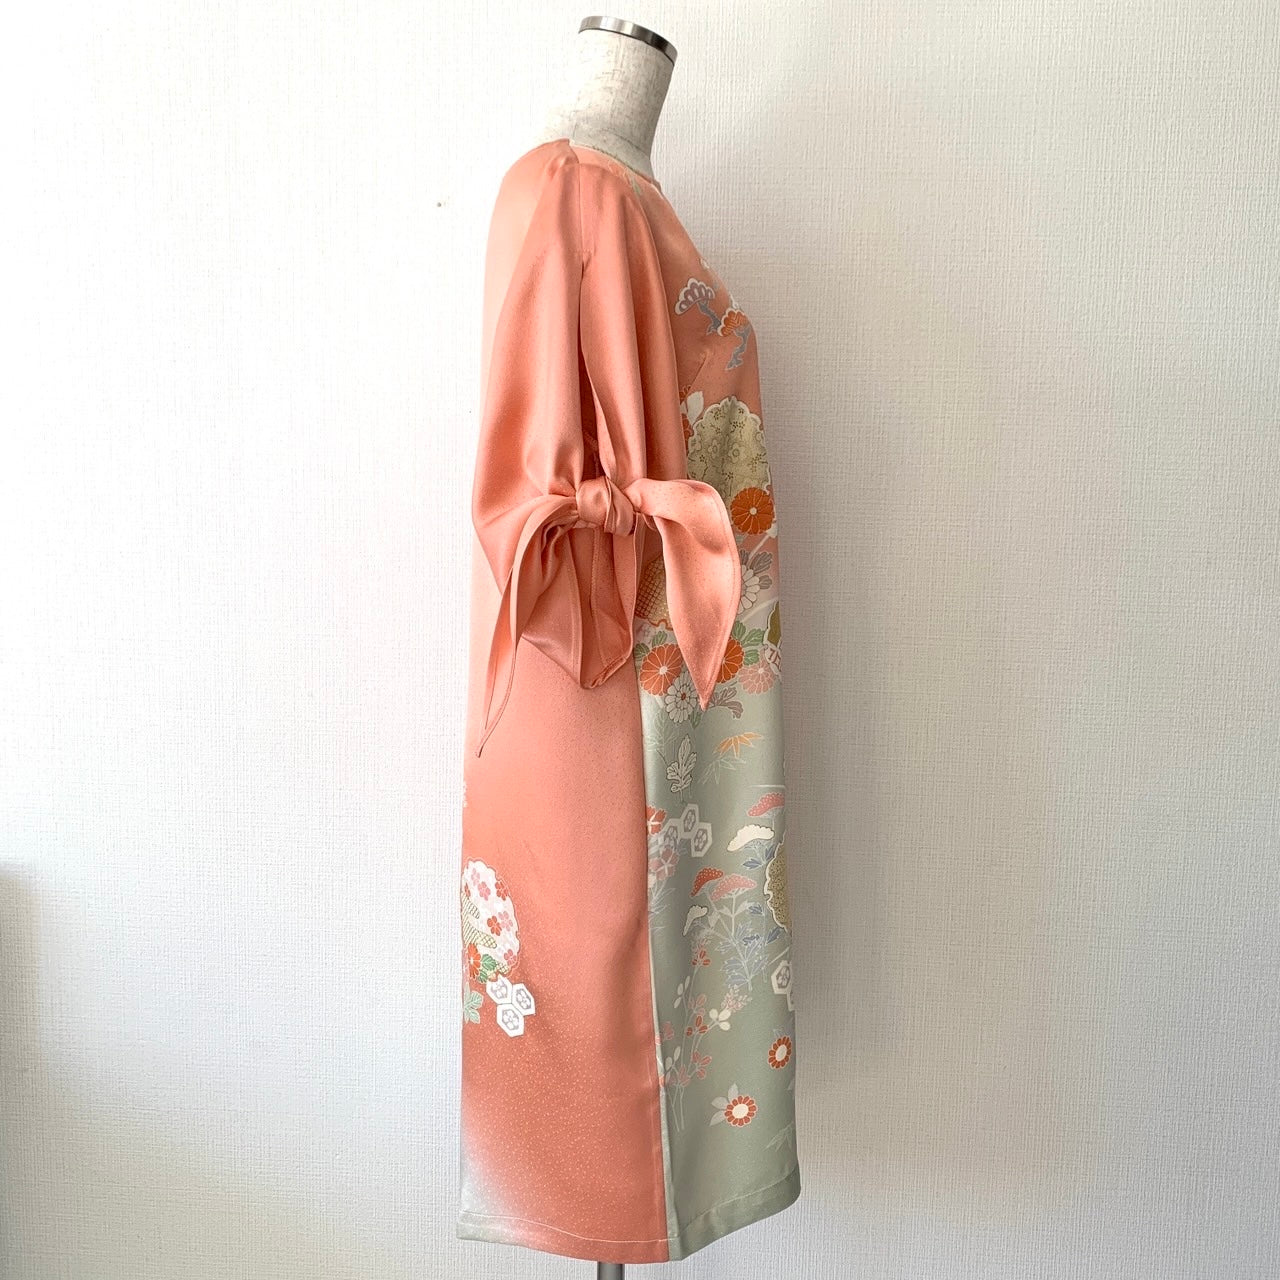 Kimono silk dress, Houmongi 訪問着, Handcrafted, Upcycled, #pre27